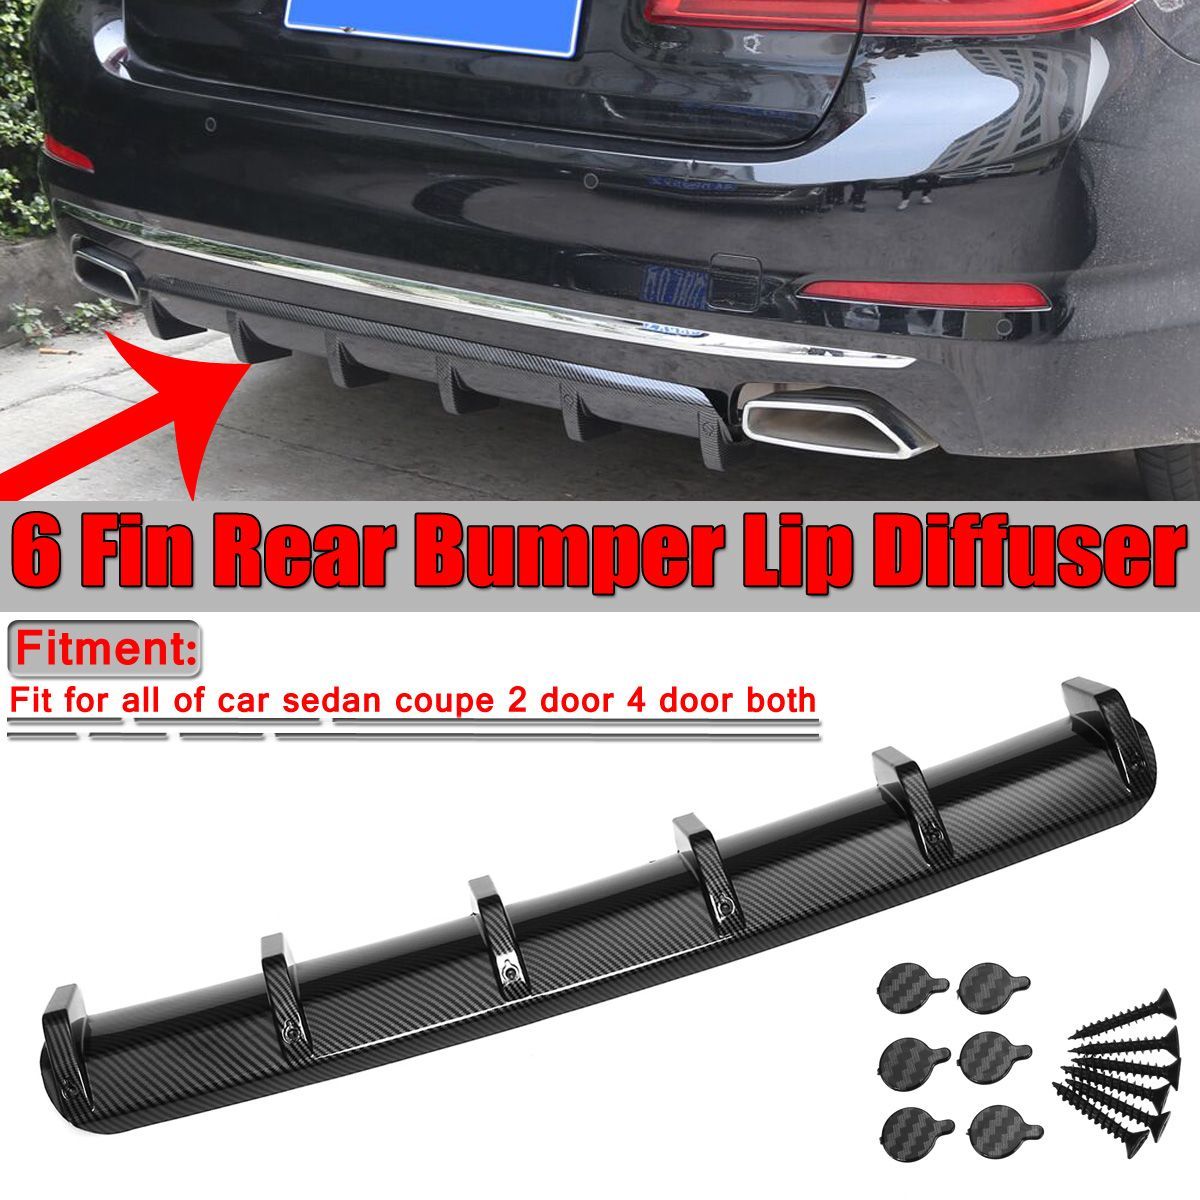 Universal-Carbon-Fiber-ABS-6-Fin-Car-Rear-Bumper-Lip-Diffuser-Splitter-Protector-Added-on-Kit-1481196